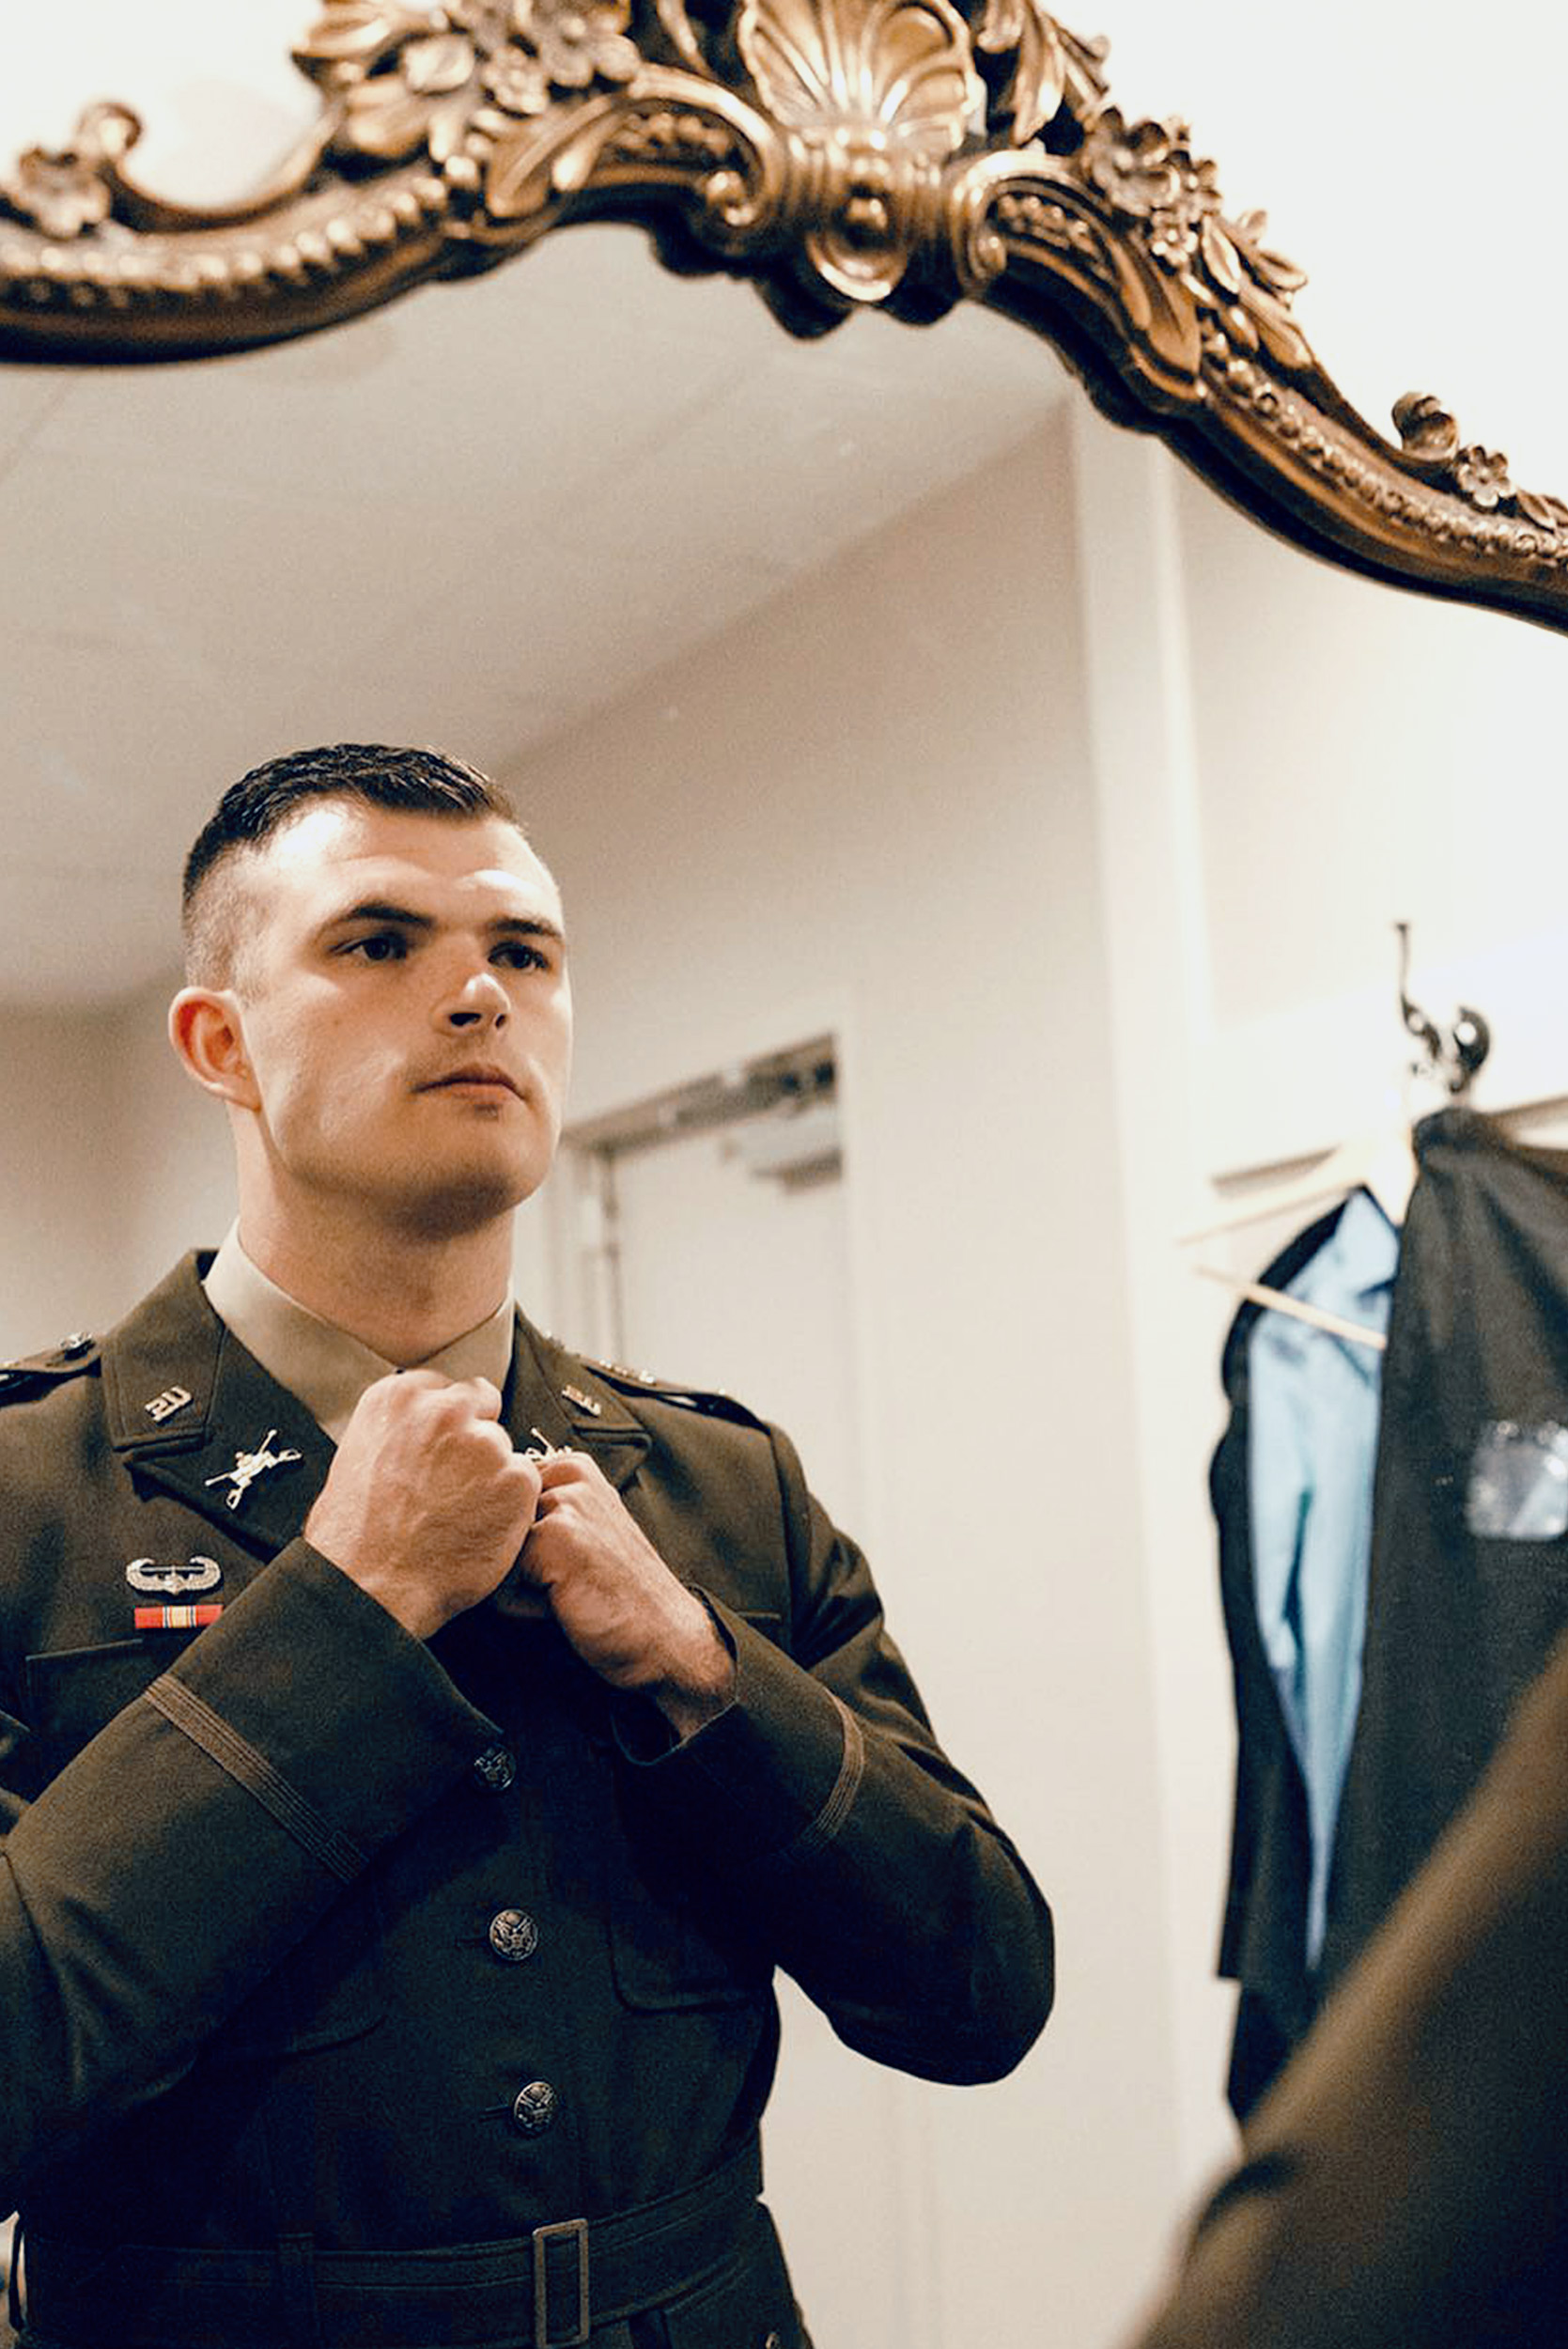 Groom in military uniform fixing tie in mirror